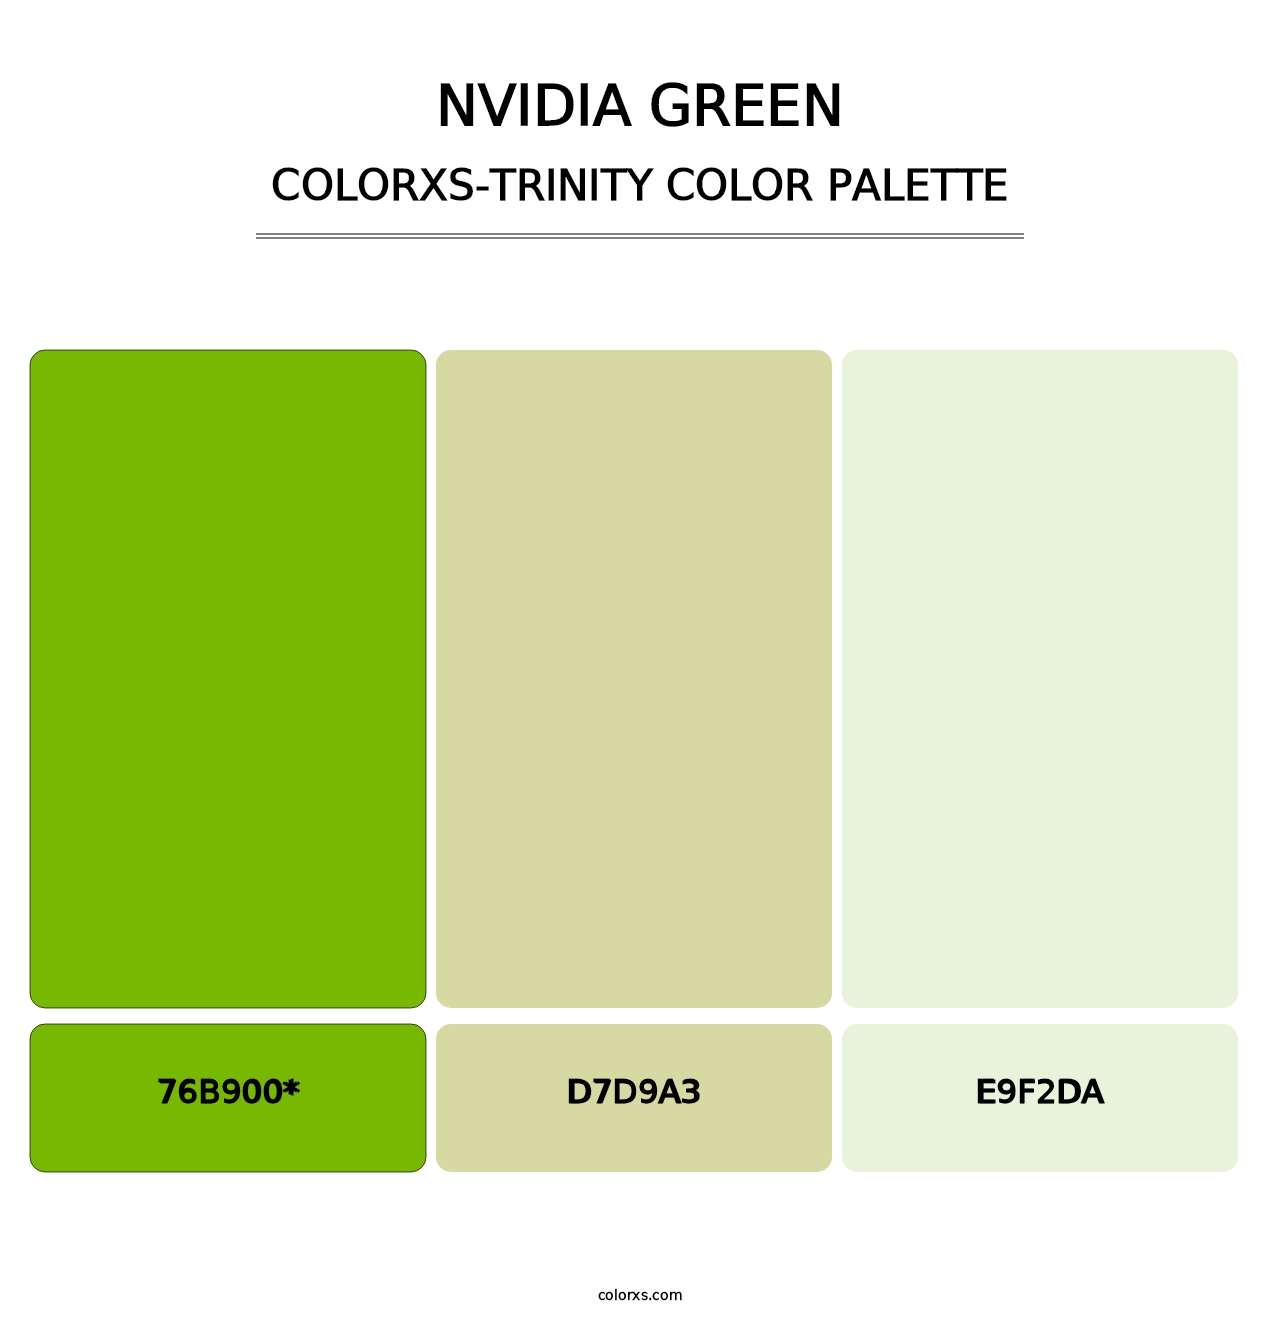 Nvidia Green - Colorxs Trinity Palette